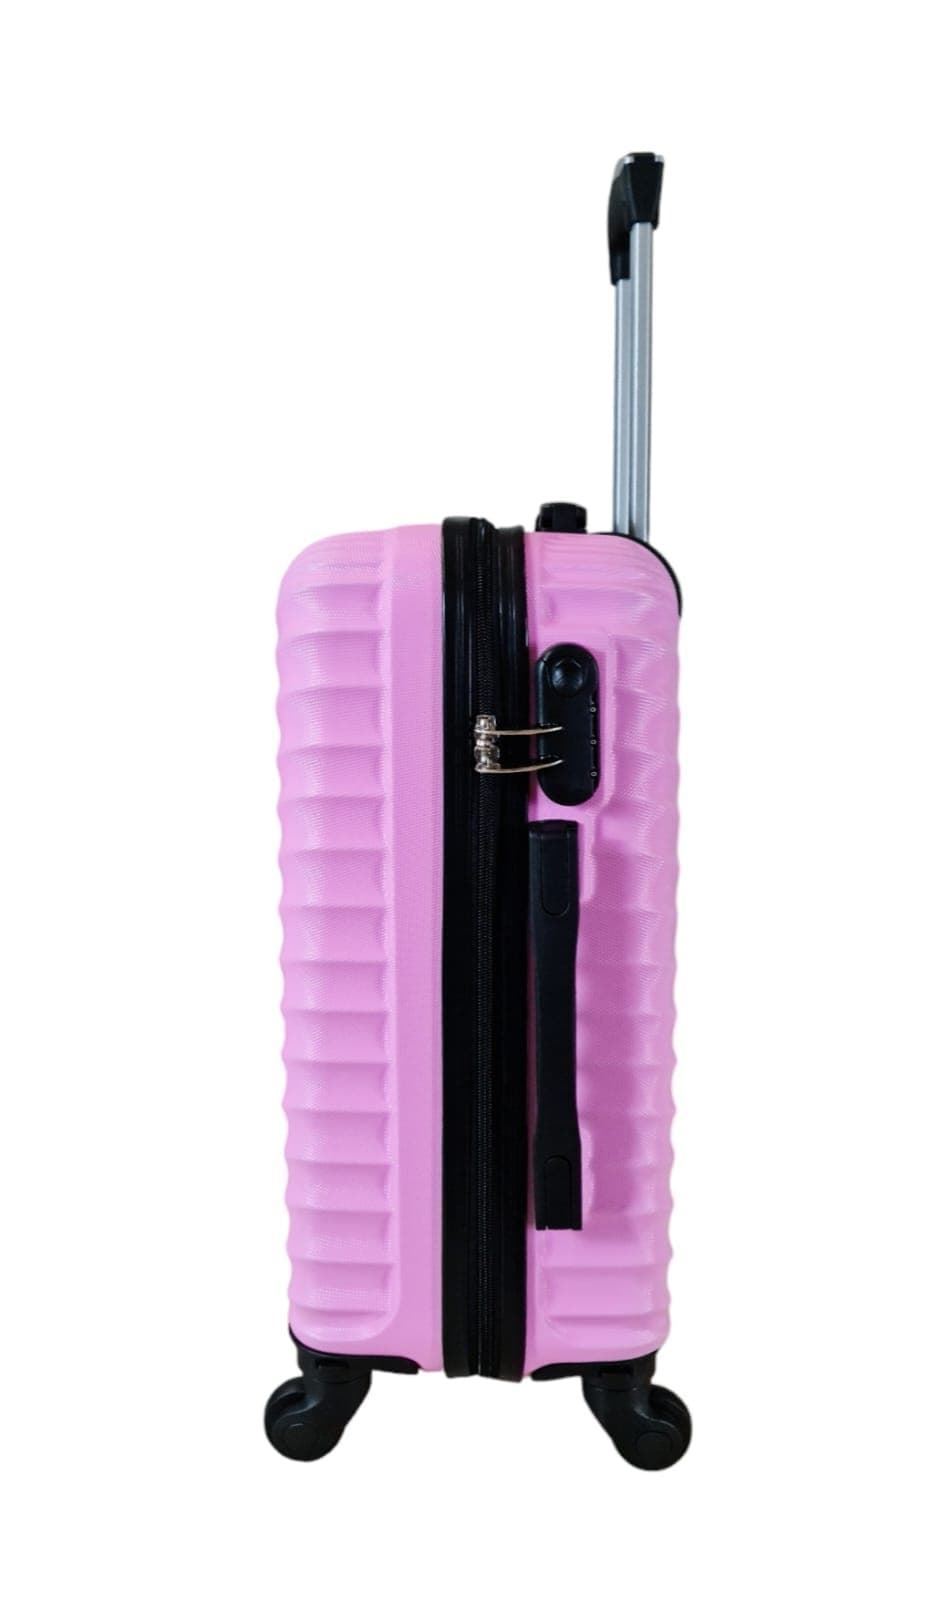 Maleta de Viaje Tamaño Cabina VIP Peso 10 kilos Material ABS Barata Medidas 55x40x20 color Rosa Barbie - Imagen 6